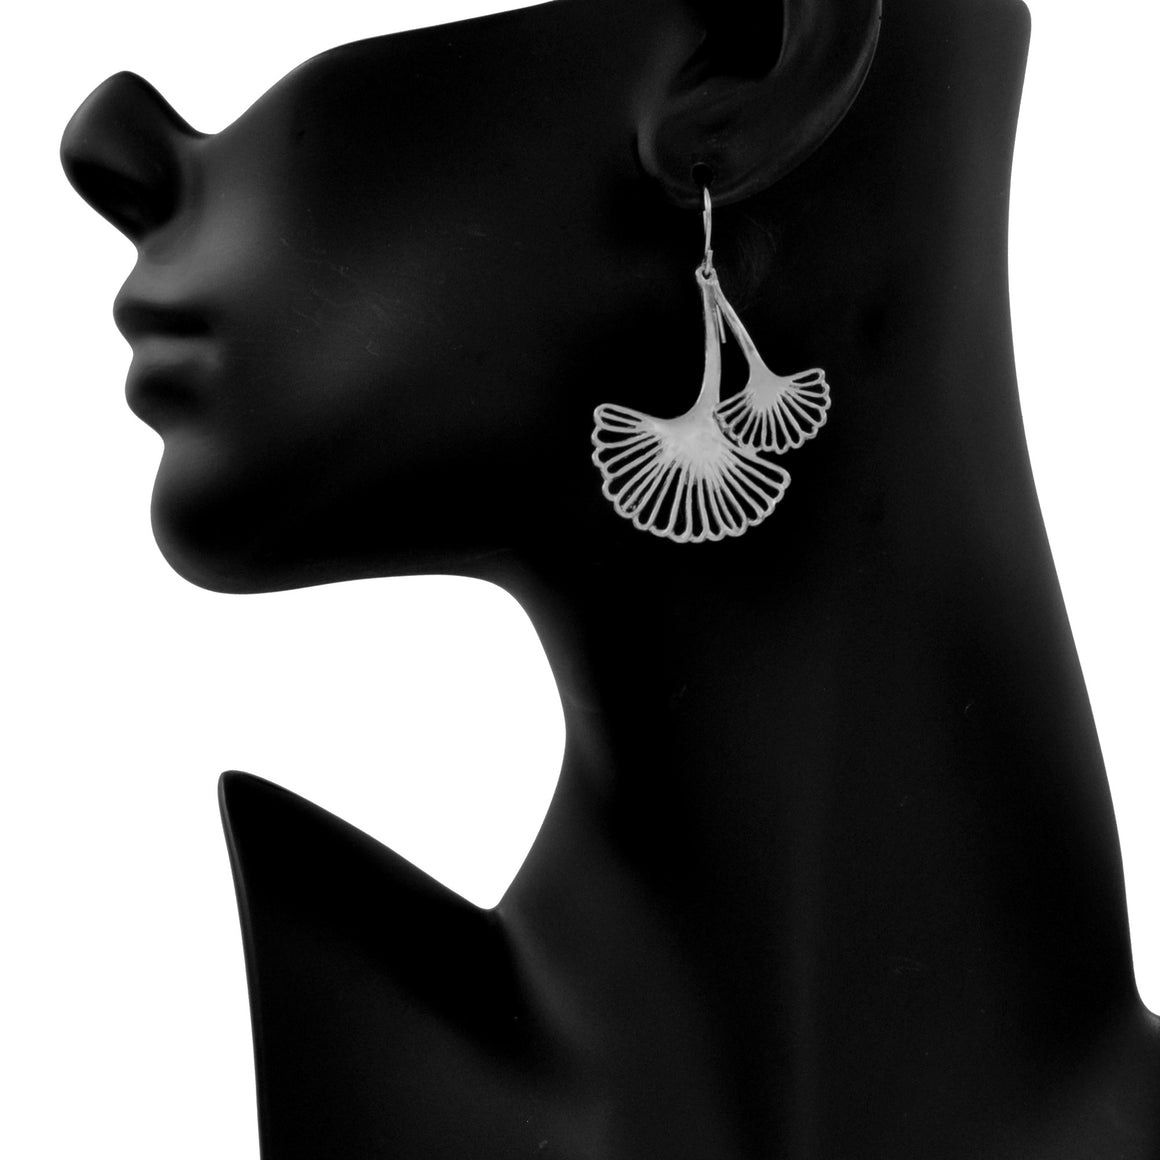 Ginkgo Cascading Leaf Earrings - Platinum Silver